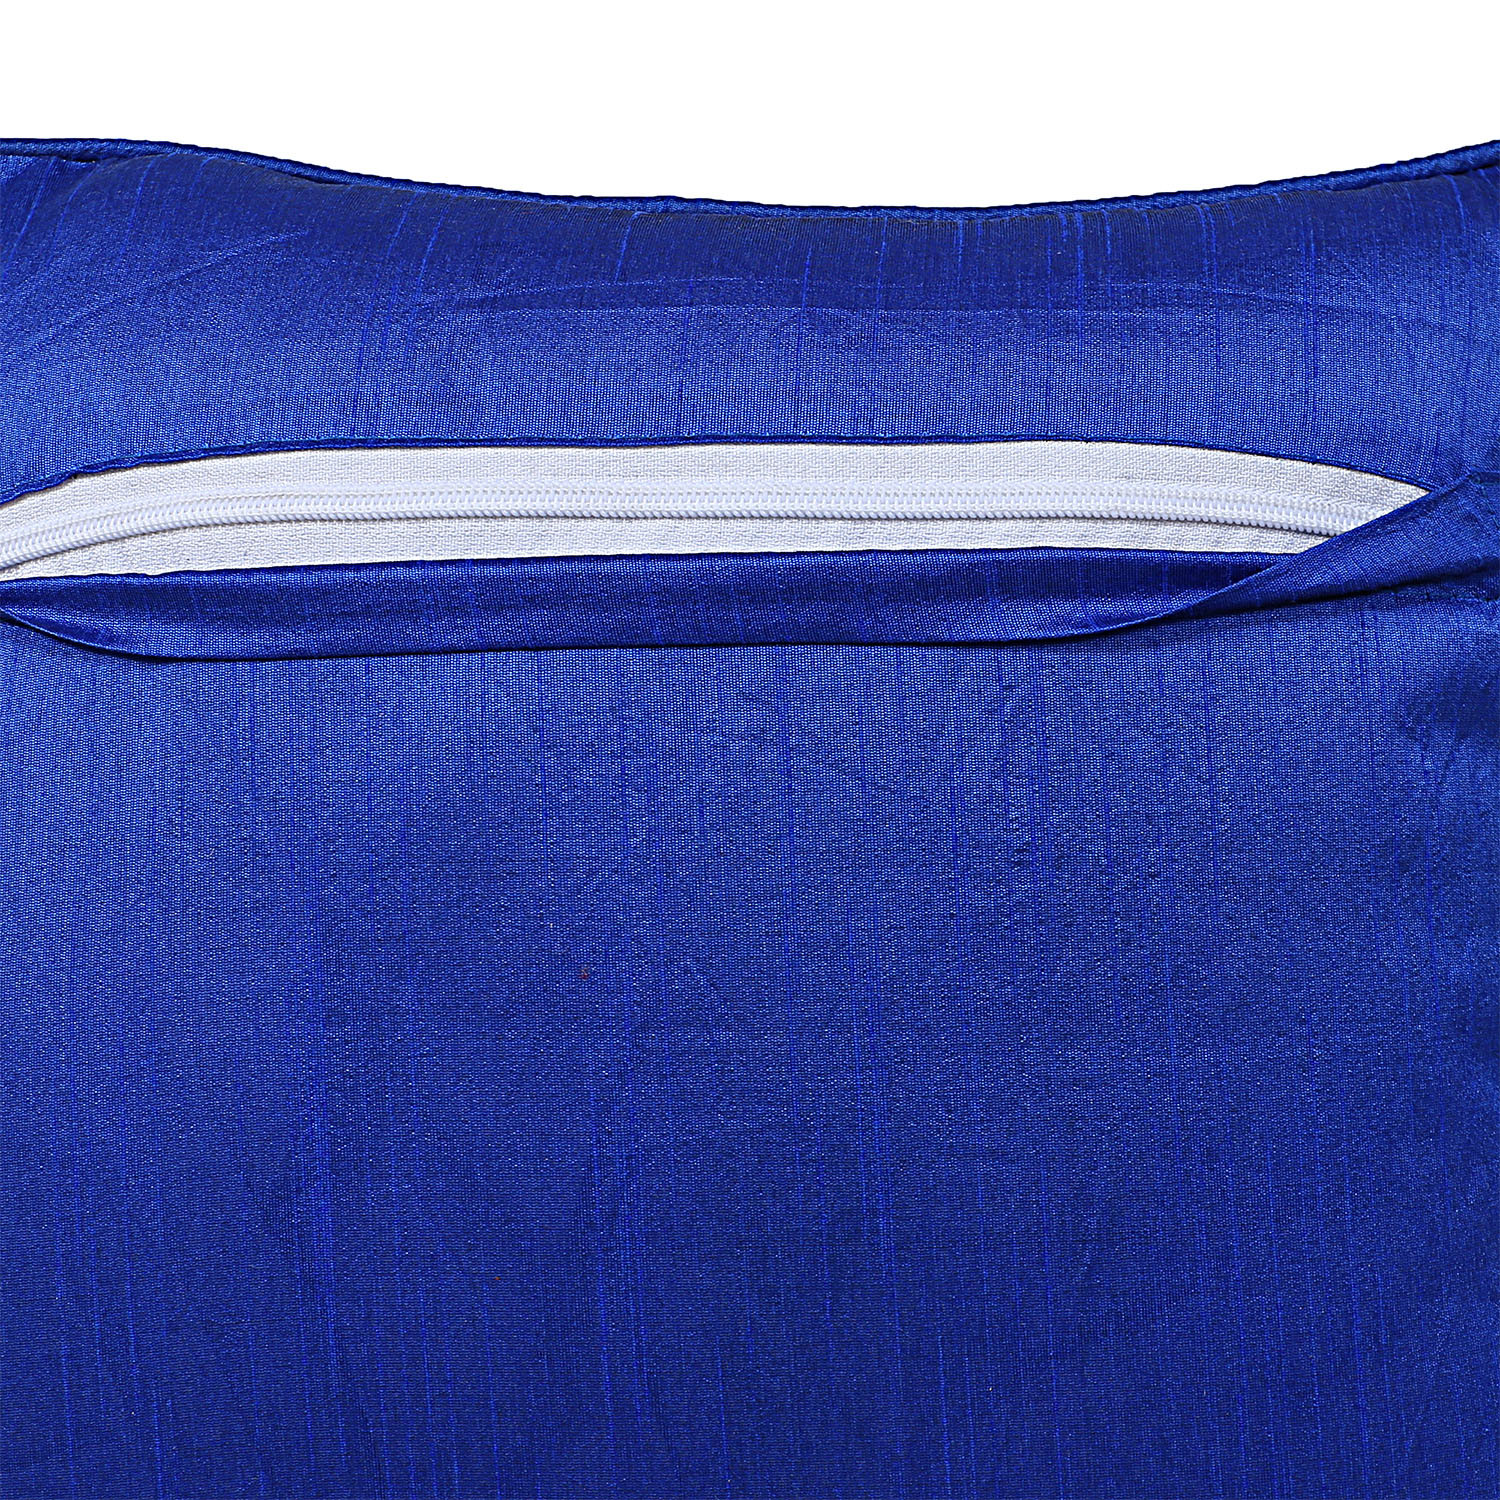 Kuber Industries Embossed Strips Print Cushion Cover|Ractangle Cushion Covers|Sofa Cushion Covers|Cushion Covers 16 inch x 16 inch|Cushion Cover Set of 5  (Multicolor)